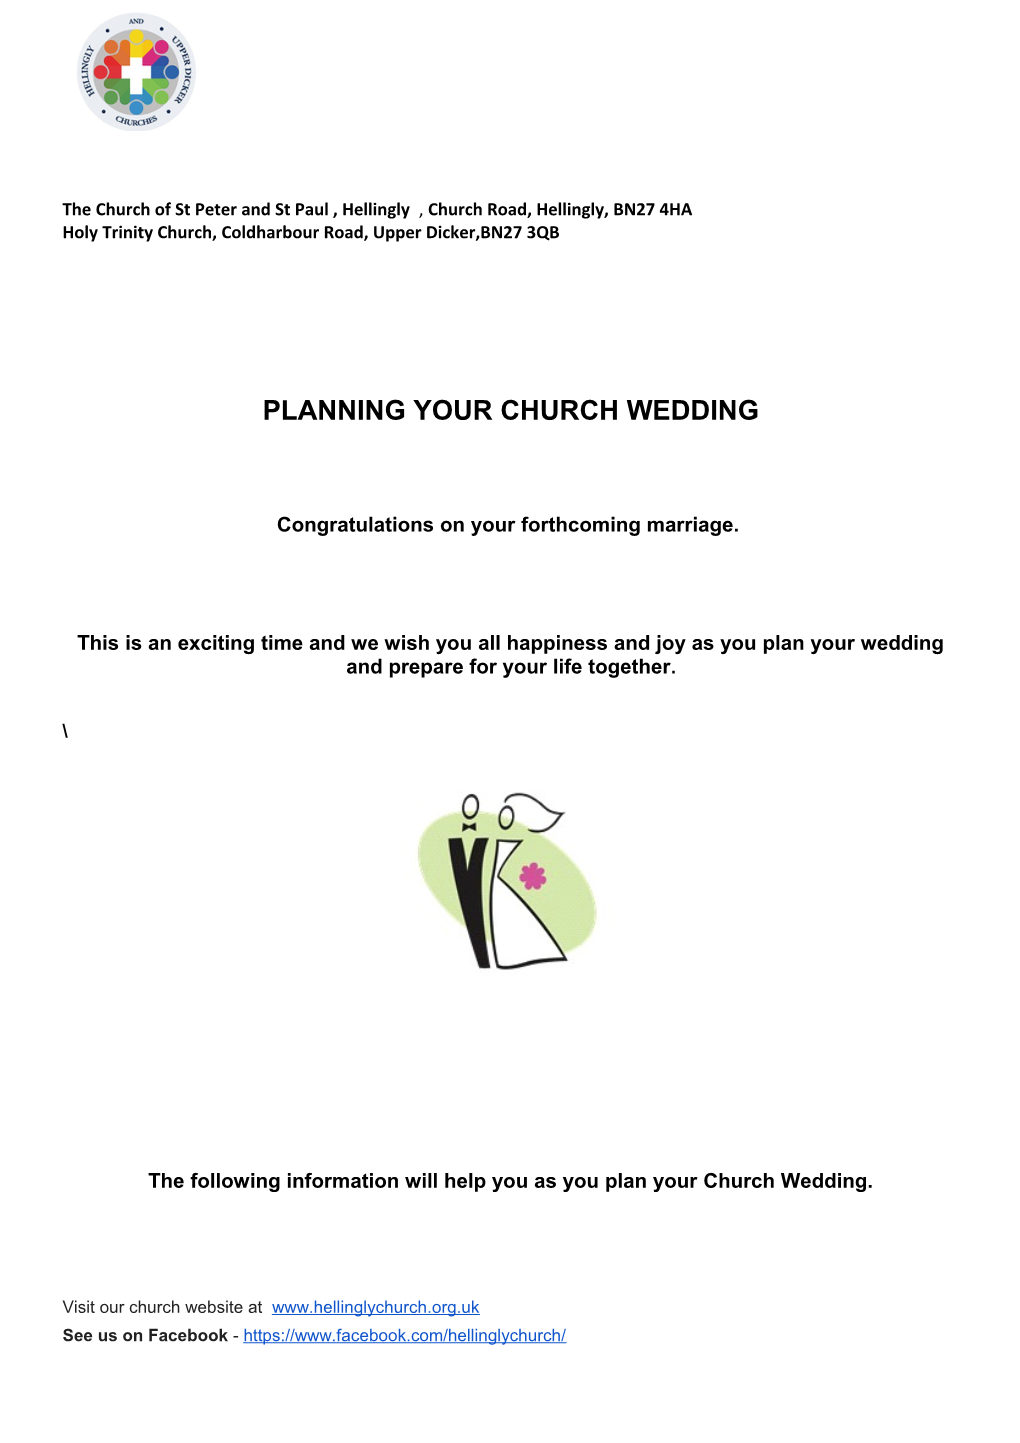 Planning Your Church Wedding